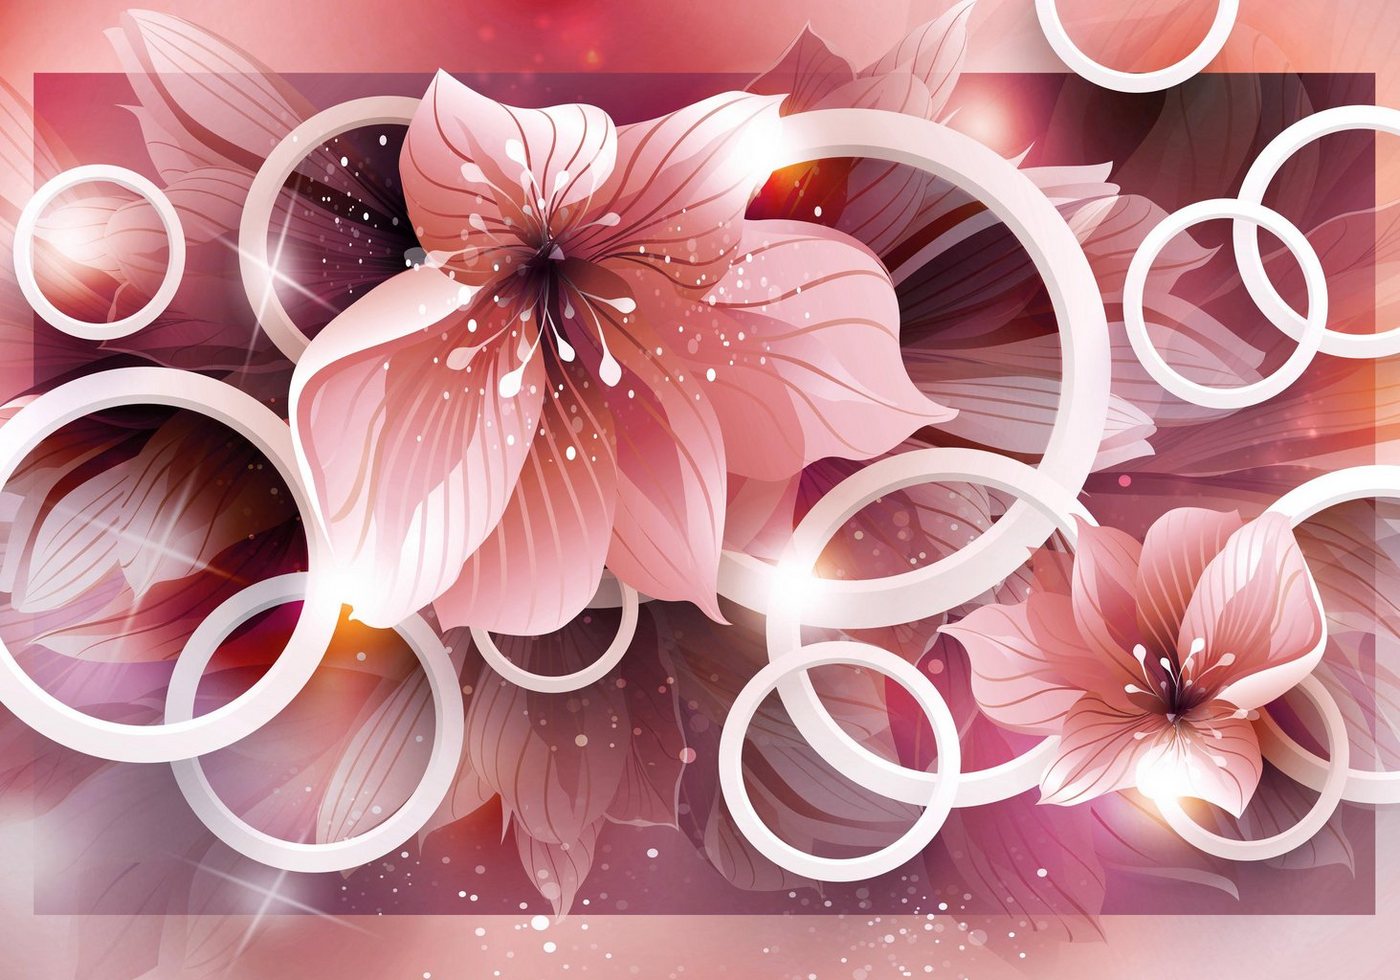 wandmotiv24 Fototapete Rosa Blumen 3D Kreise Blättern Glitzern, glatt, Wandtapete, Motivtapete, matt, Vliestapete von wandmotiv24